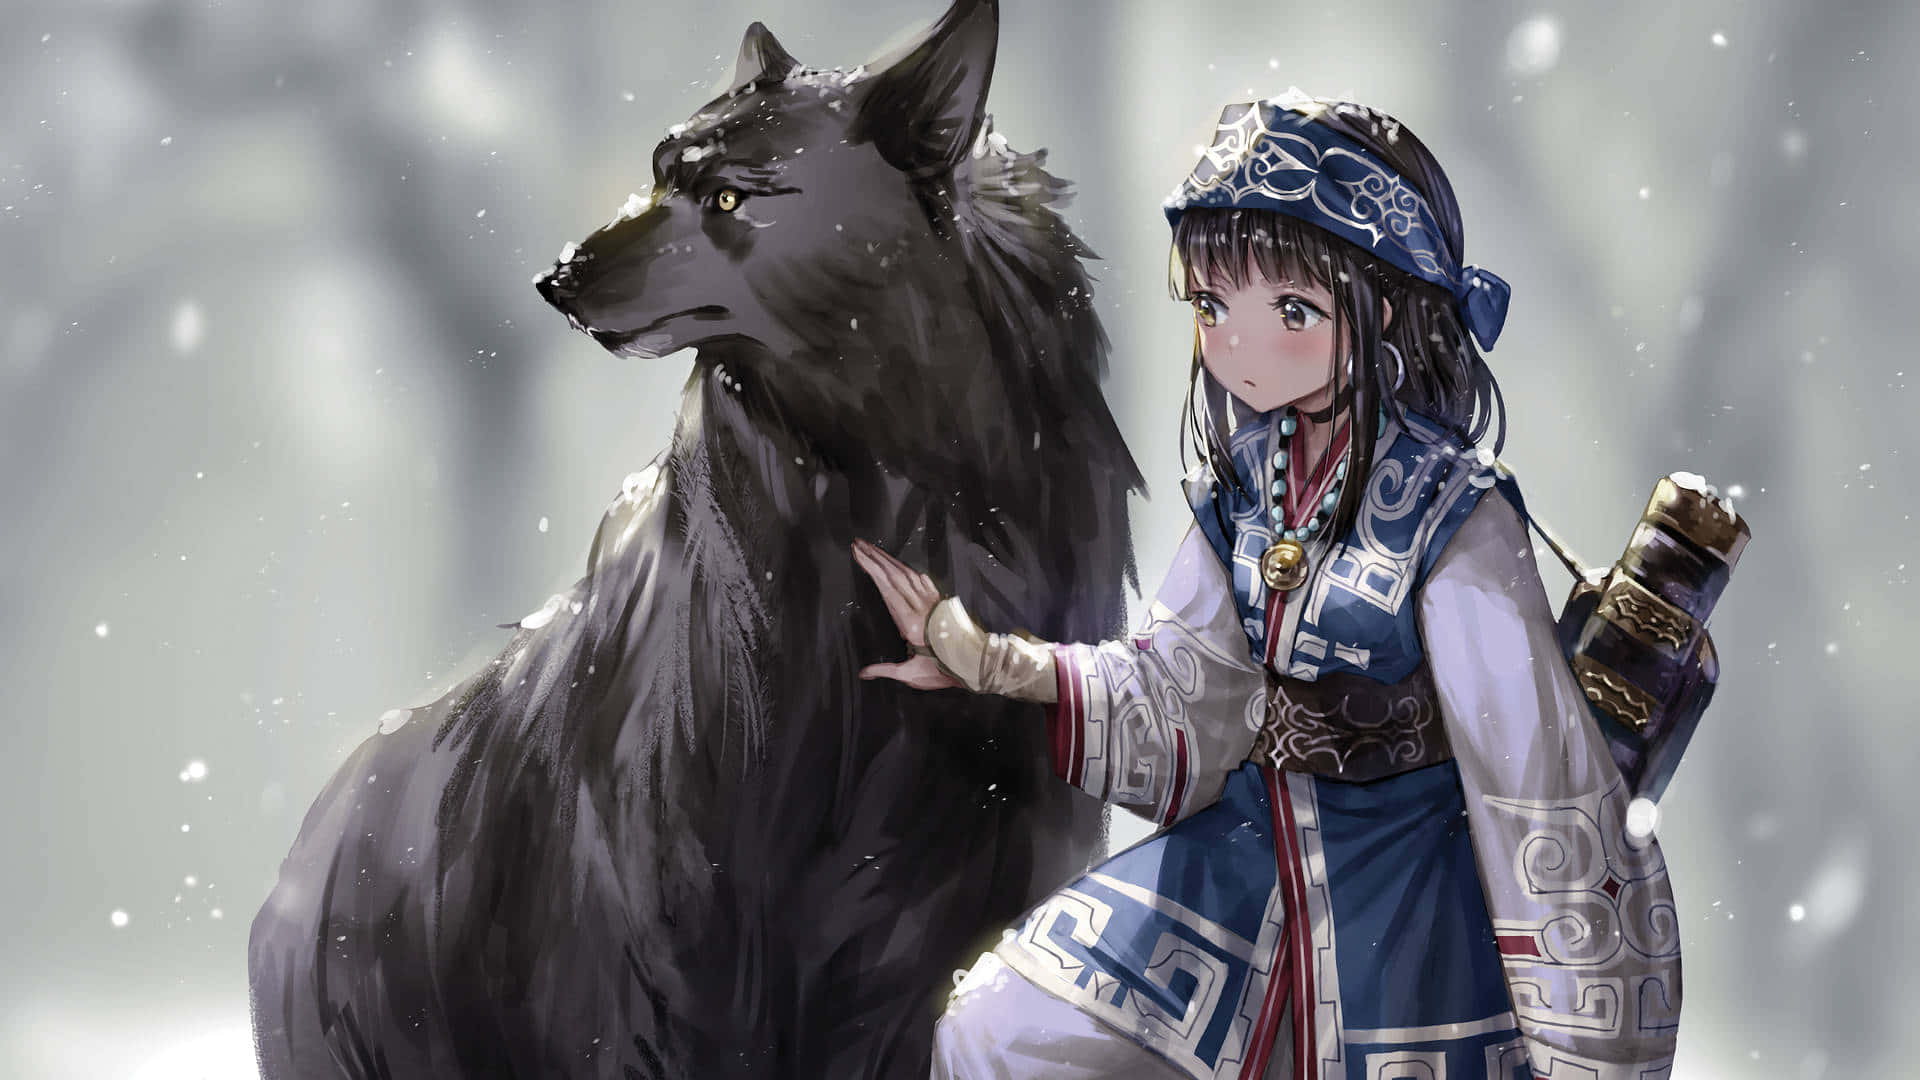 Hintergrundbildmit Anime-hund